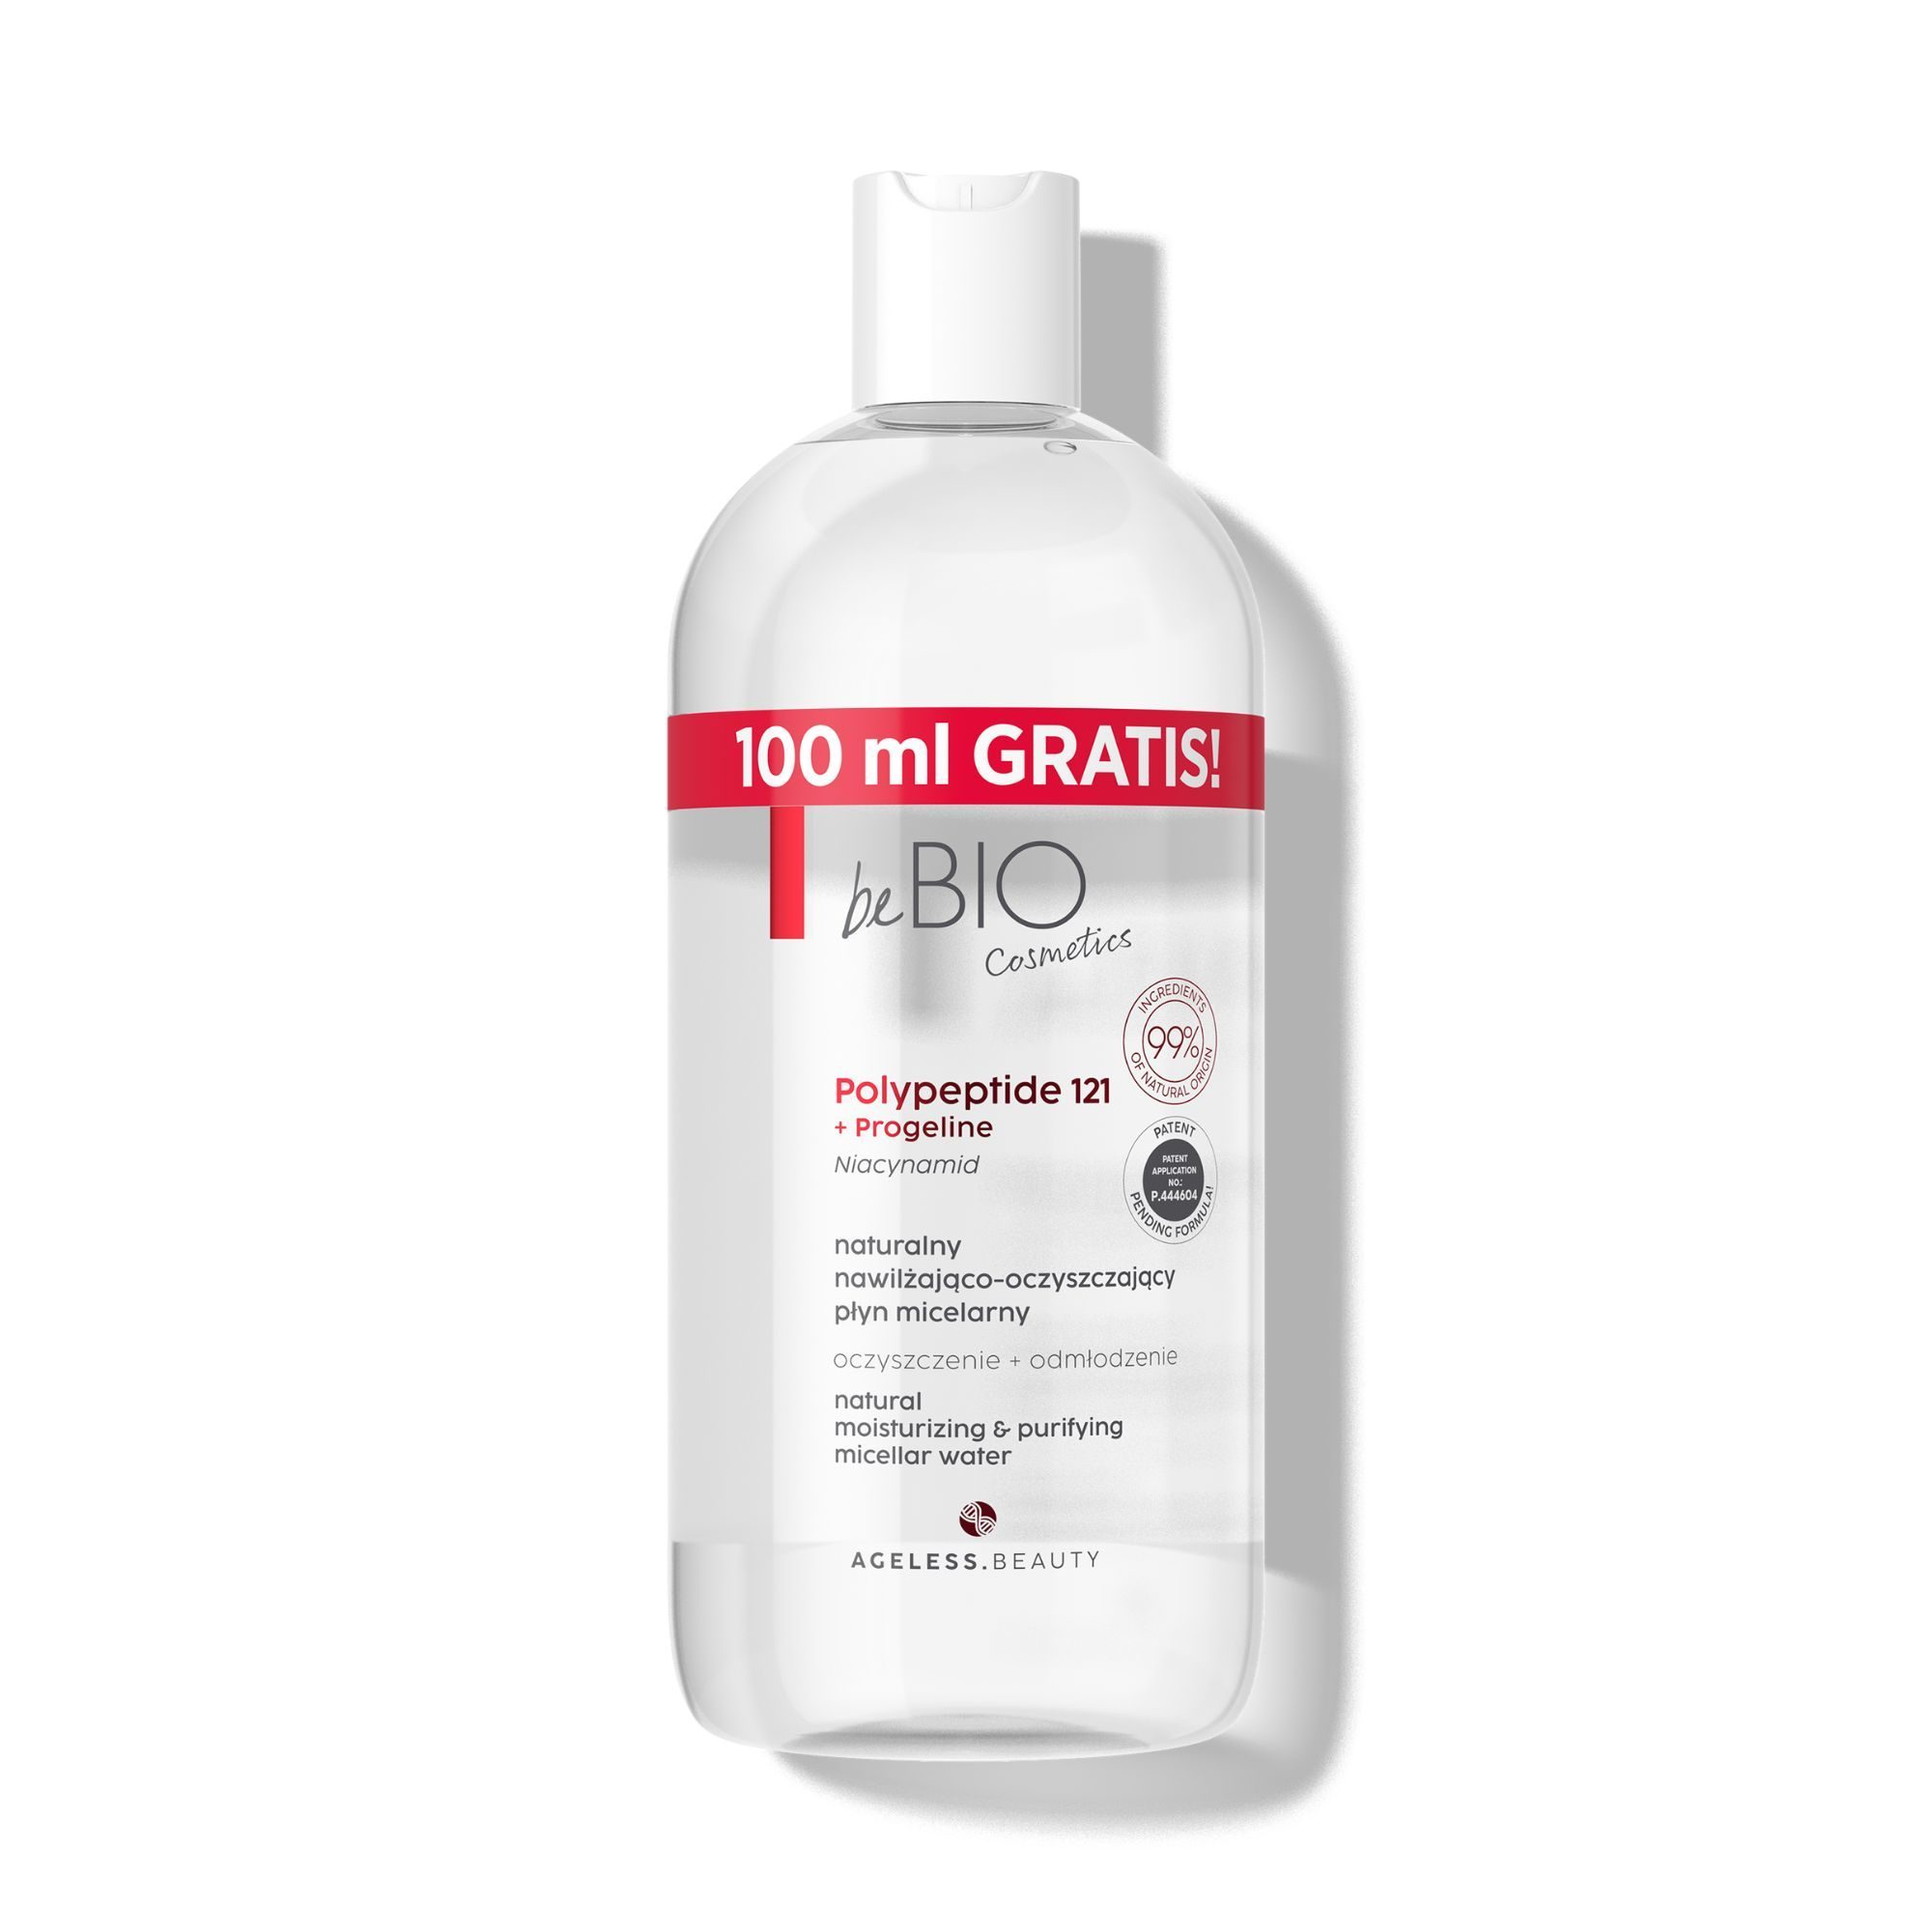 beBIO-Ageless-Beauty-Natural-moisturizing-and-cleansing-micellar-liquid-500ml